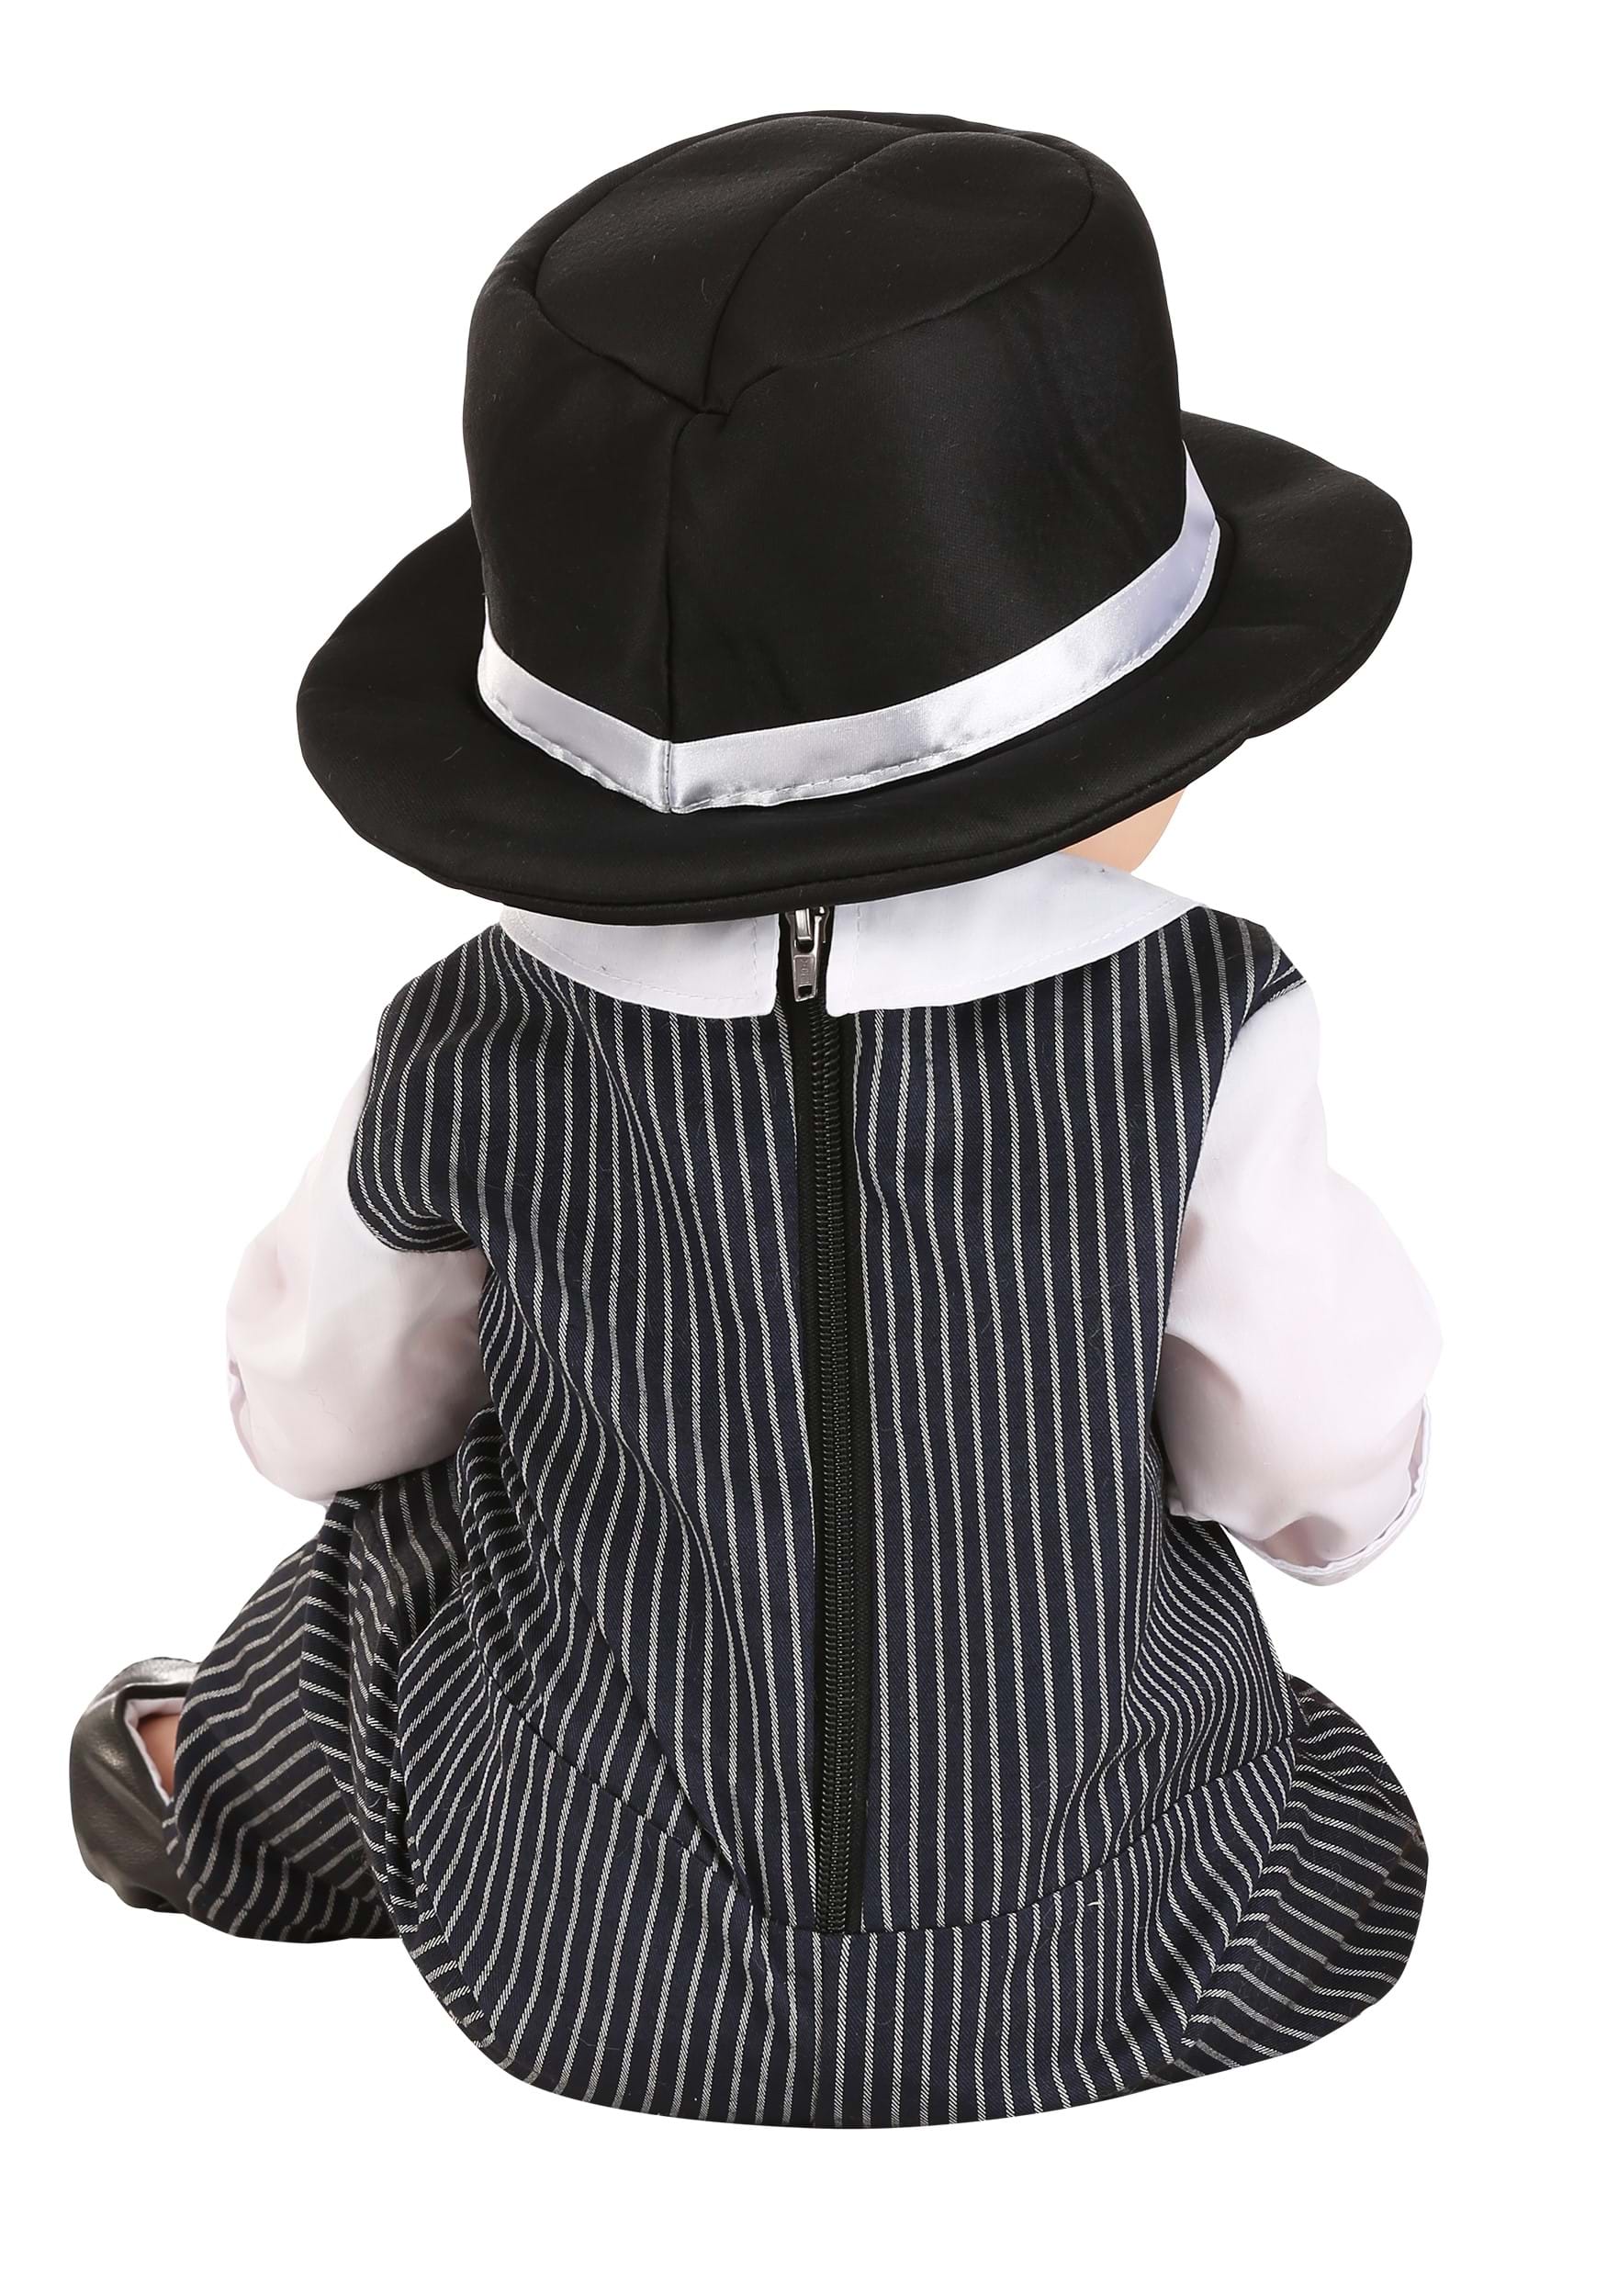 Suave Gangster Costume For Infants